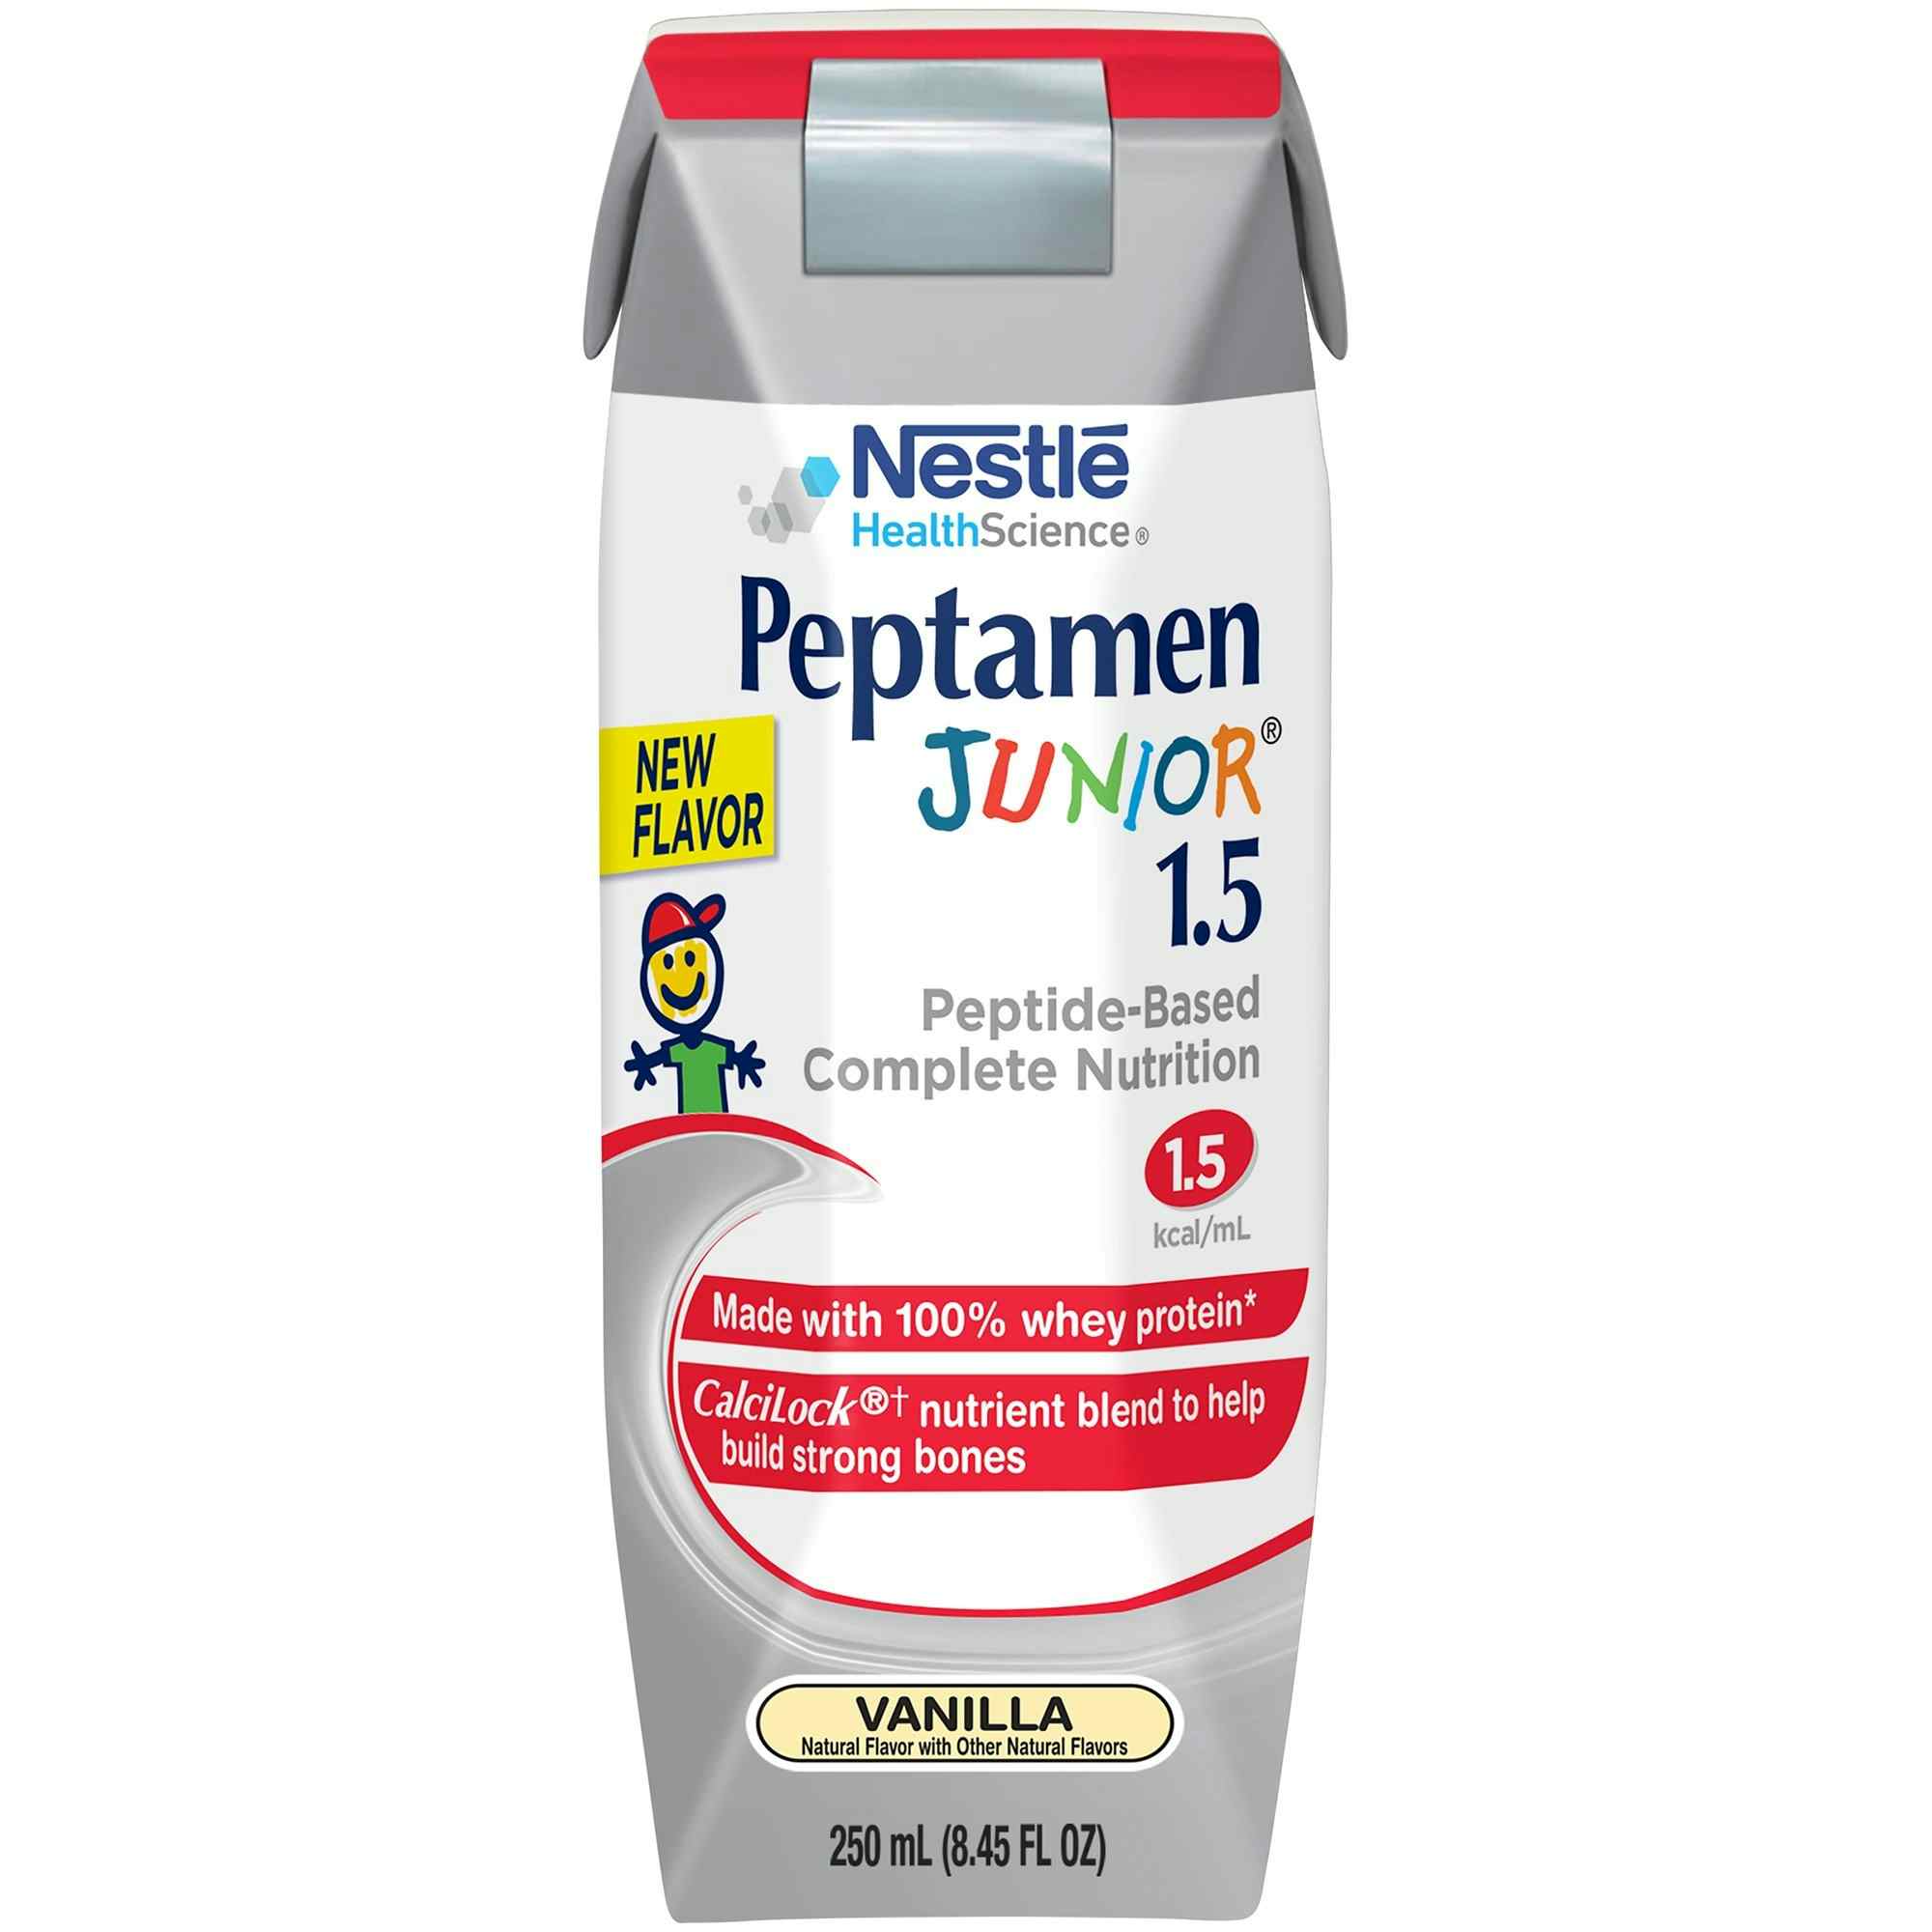 Nestle HealthScience Peptamen Junior 1.5 Peptide-Based Nutritionally Complete Formula, Vanilla, 8.45 oz., 00098716855359, Case of 24